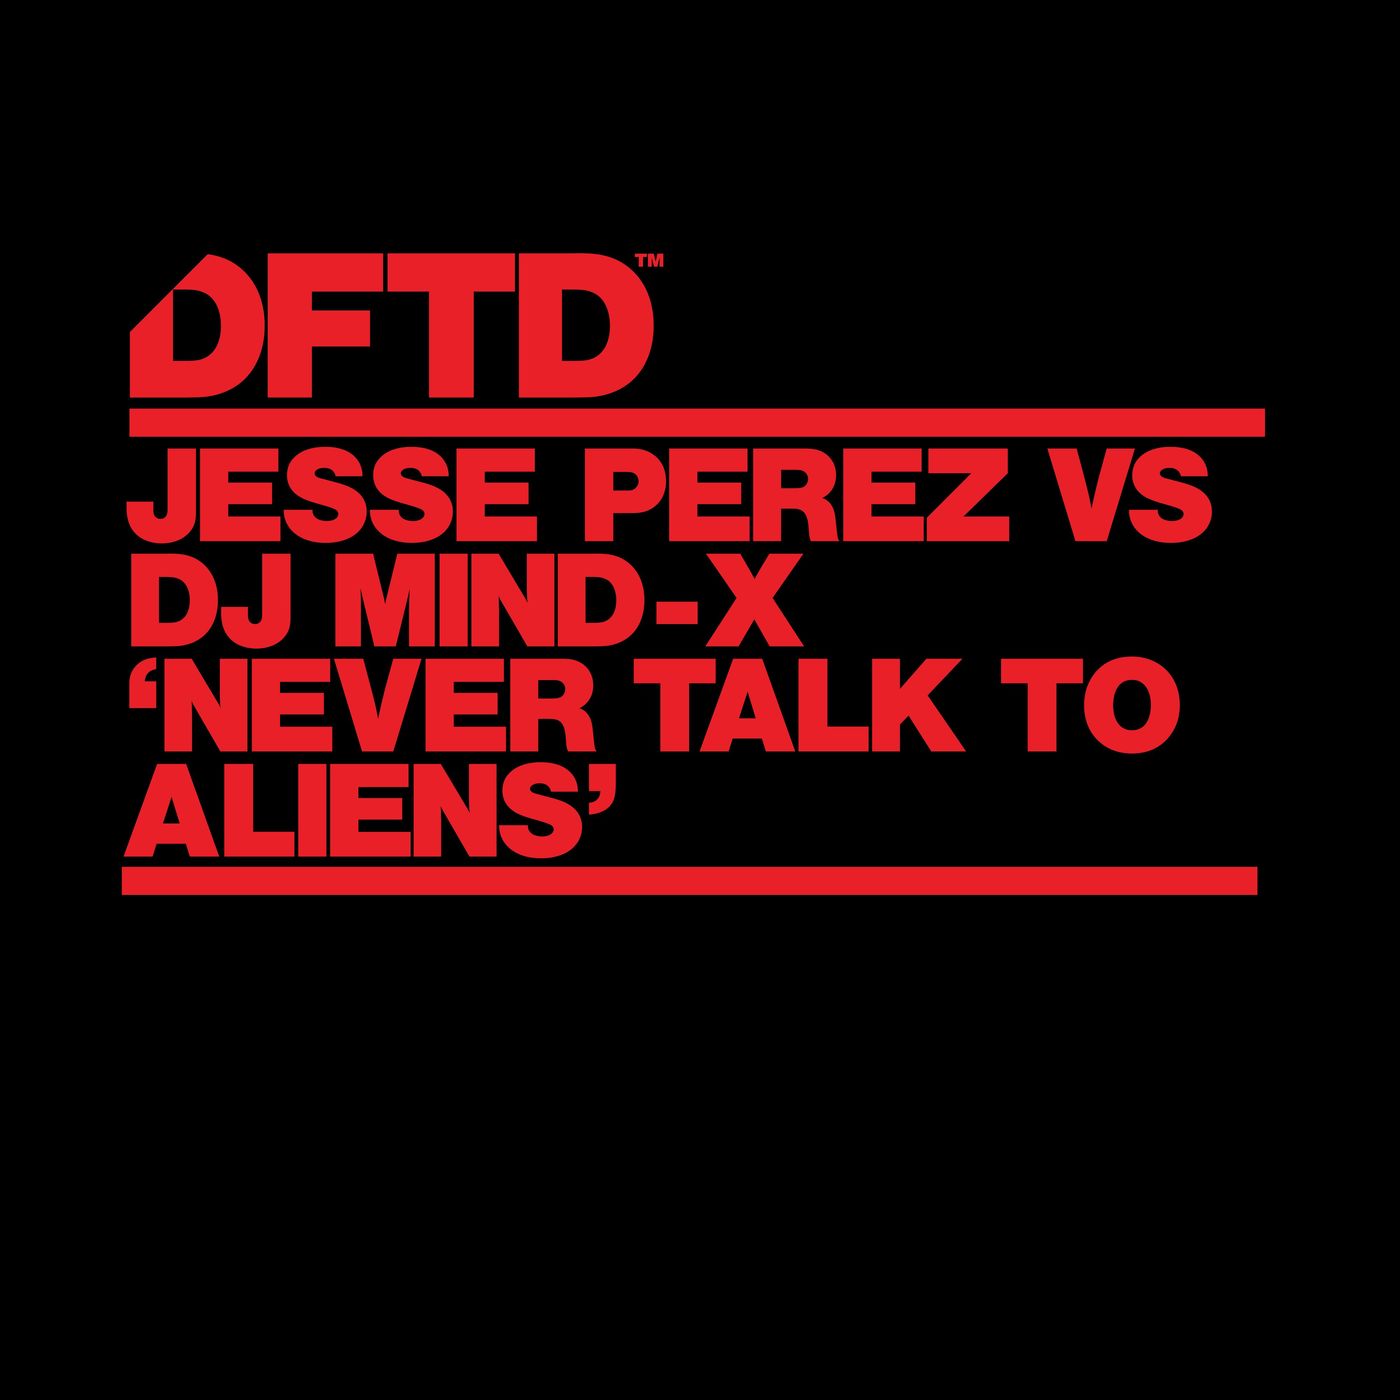 Jesse Perez - Never Talk To Aliens / DFTD